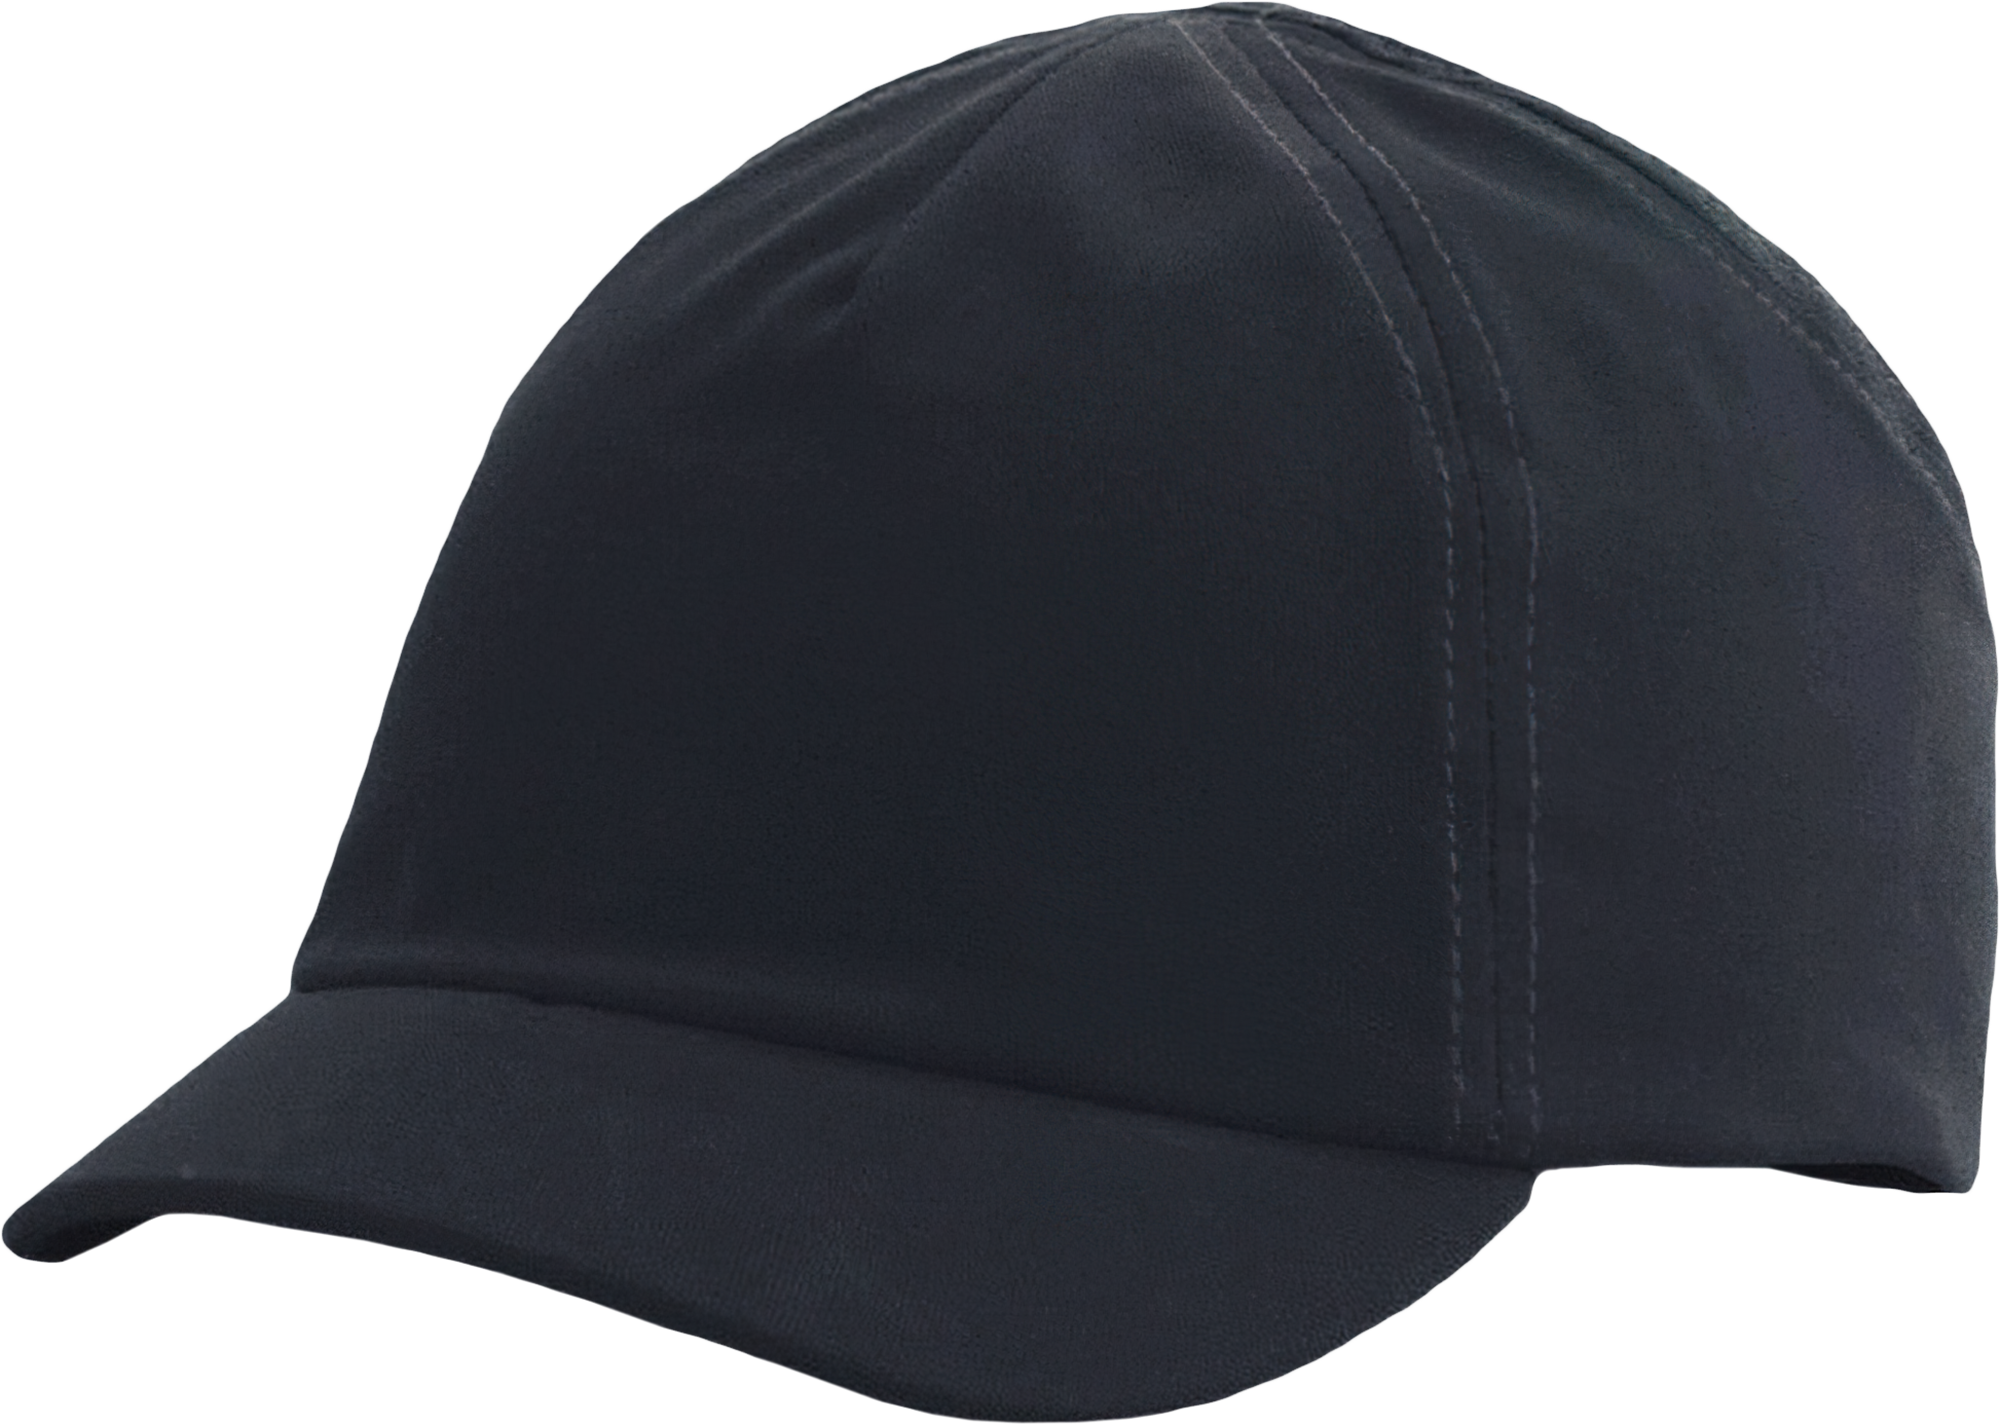 Каскетка РОСОМЗ™ RZ ВИЗИОН CAP (98220) черная, длина козырька 55 мм – 1